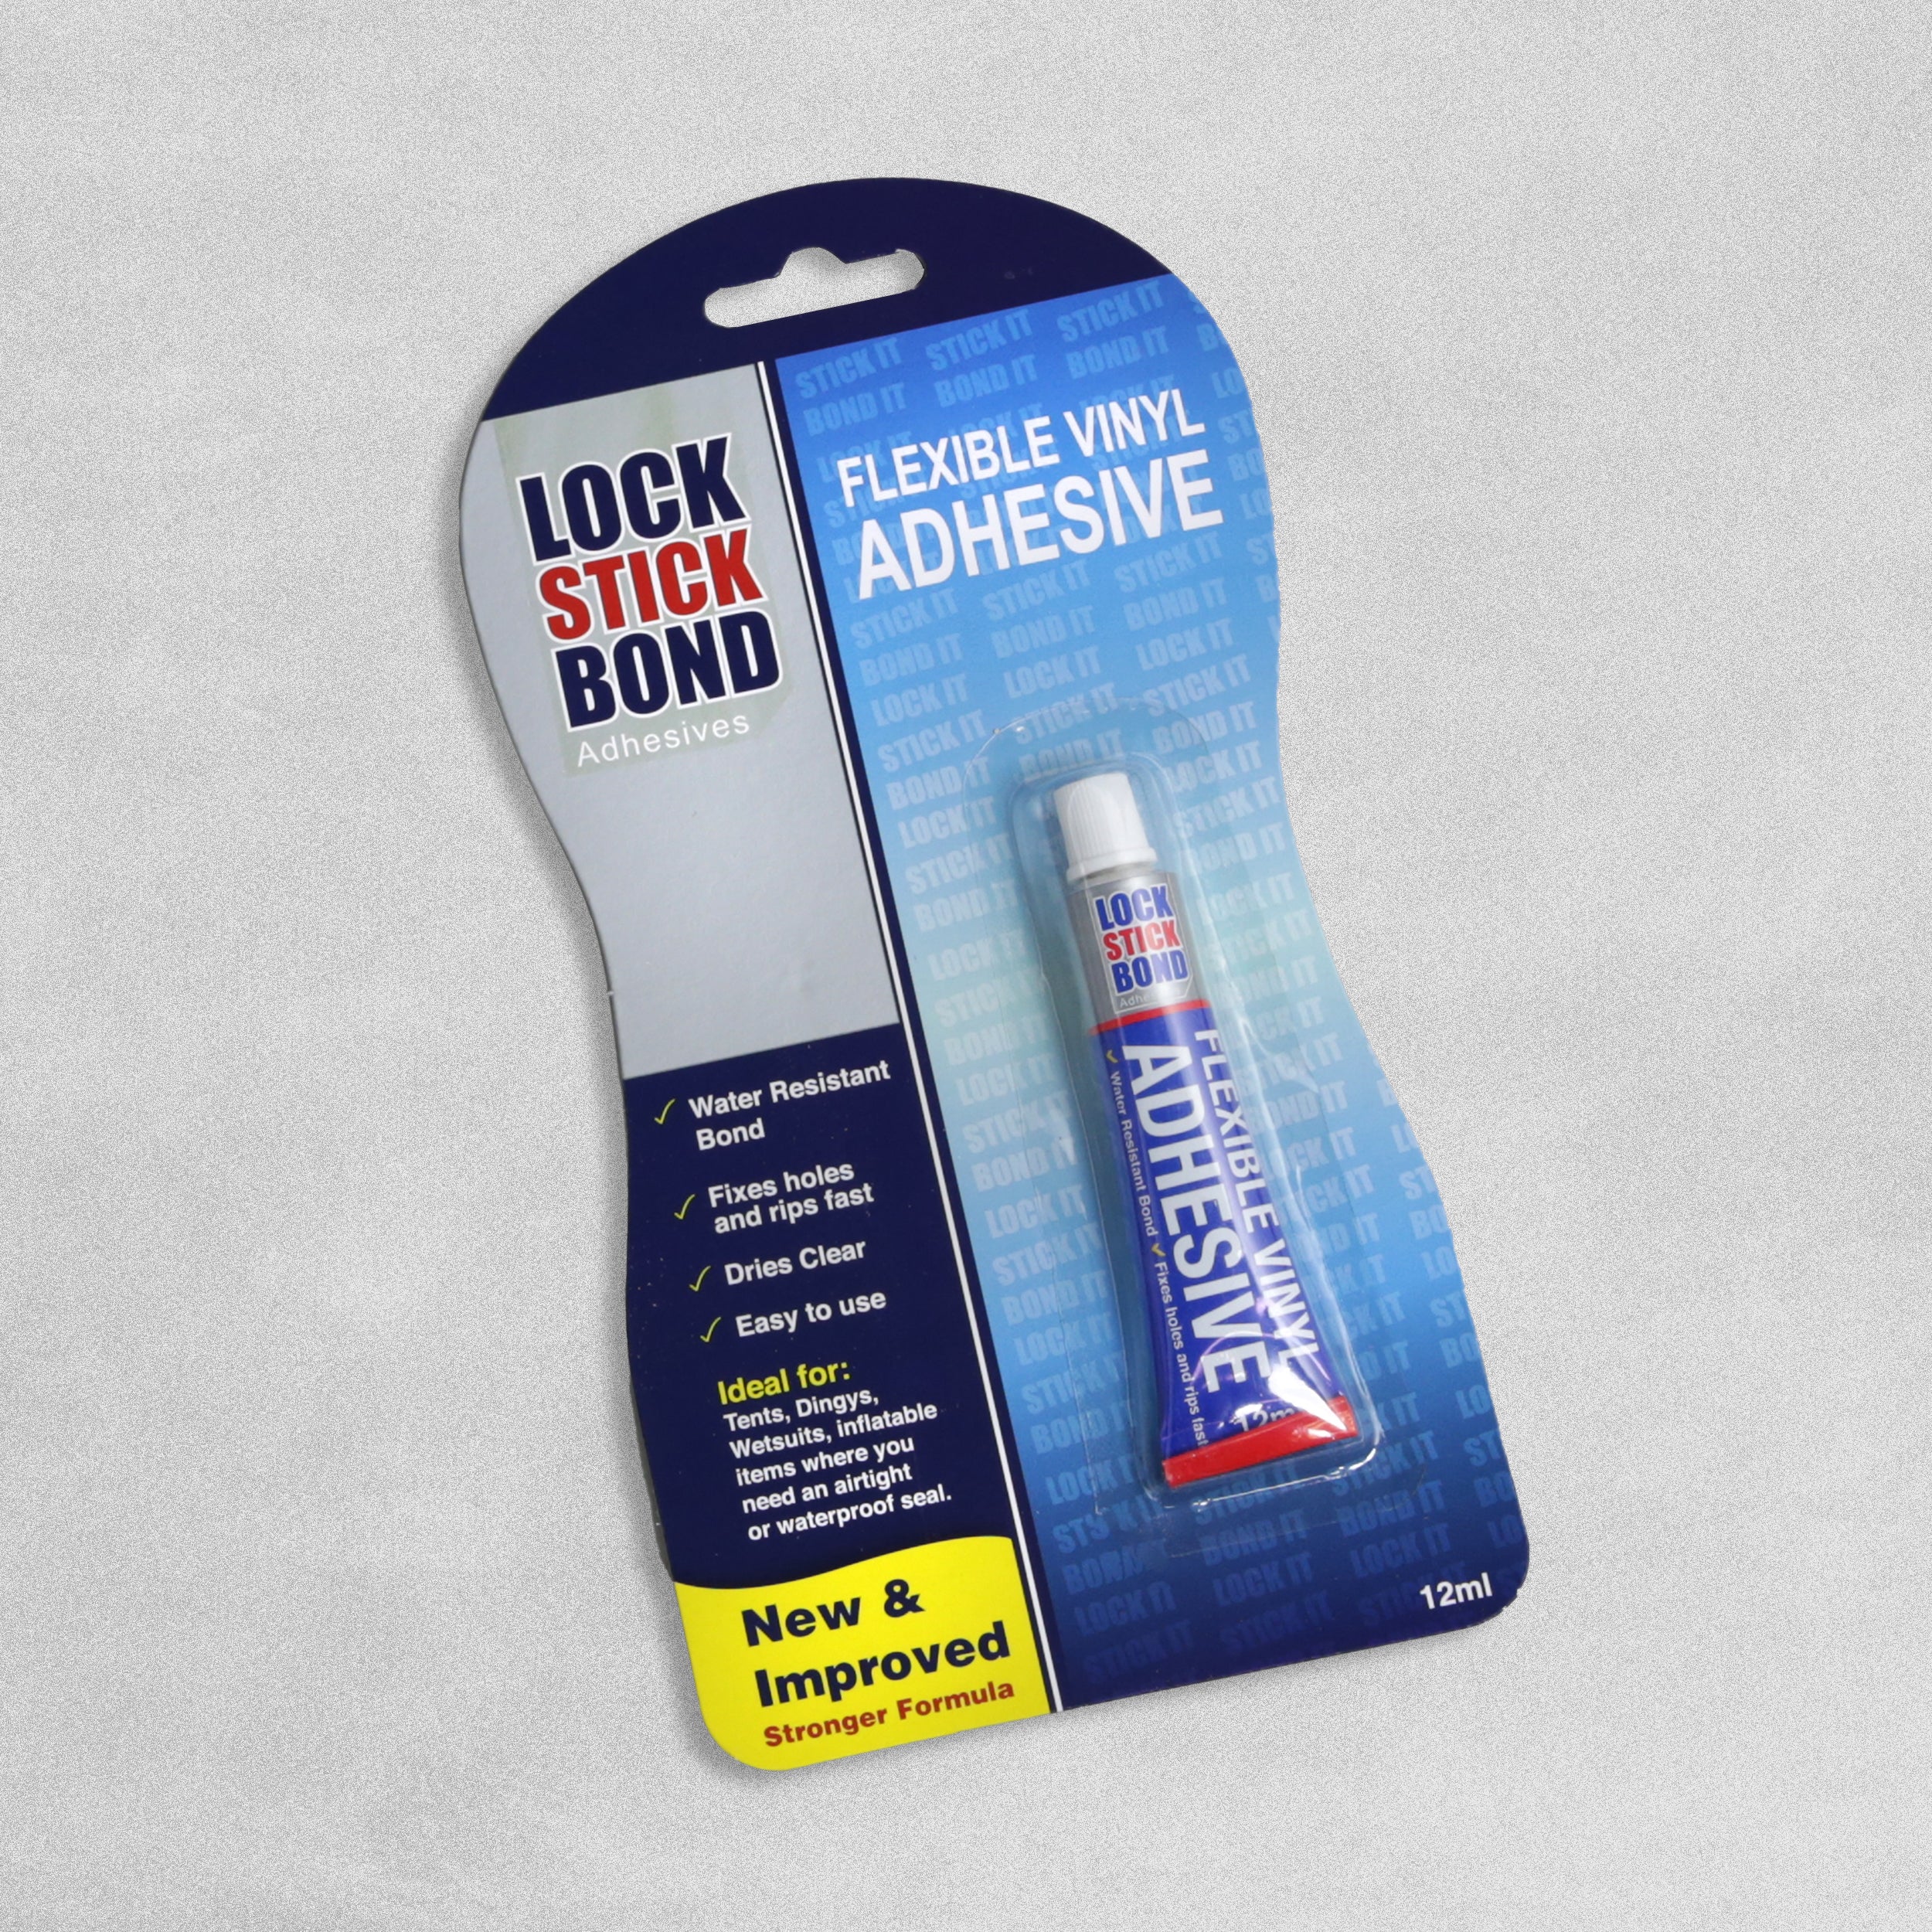 Lock Stick Bond Flexible Vinyl Adhesive - 12ml